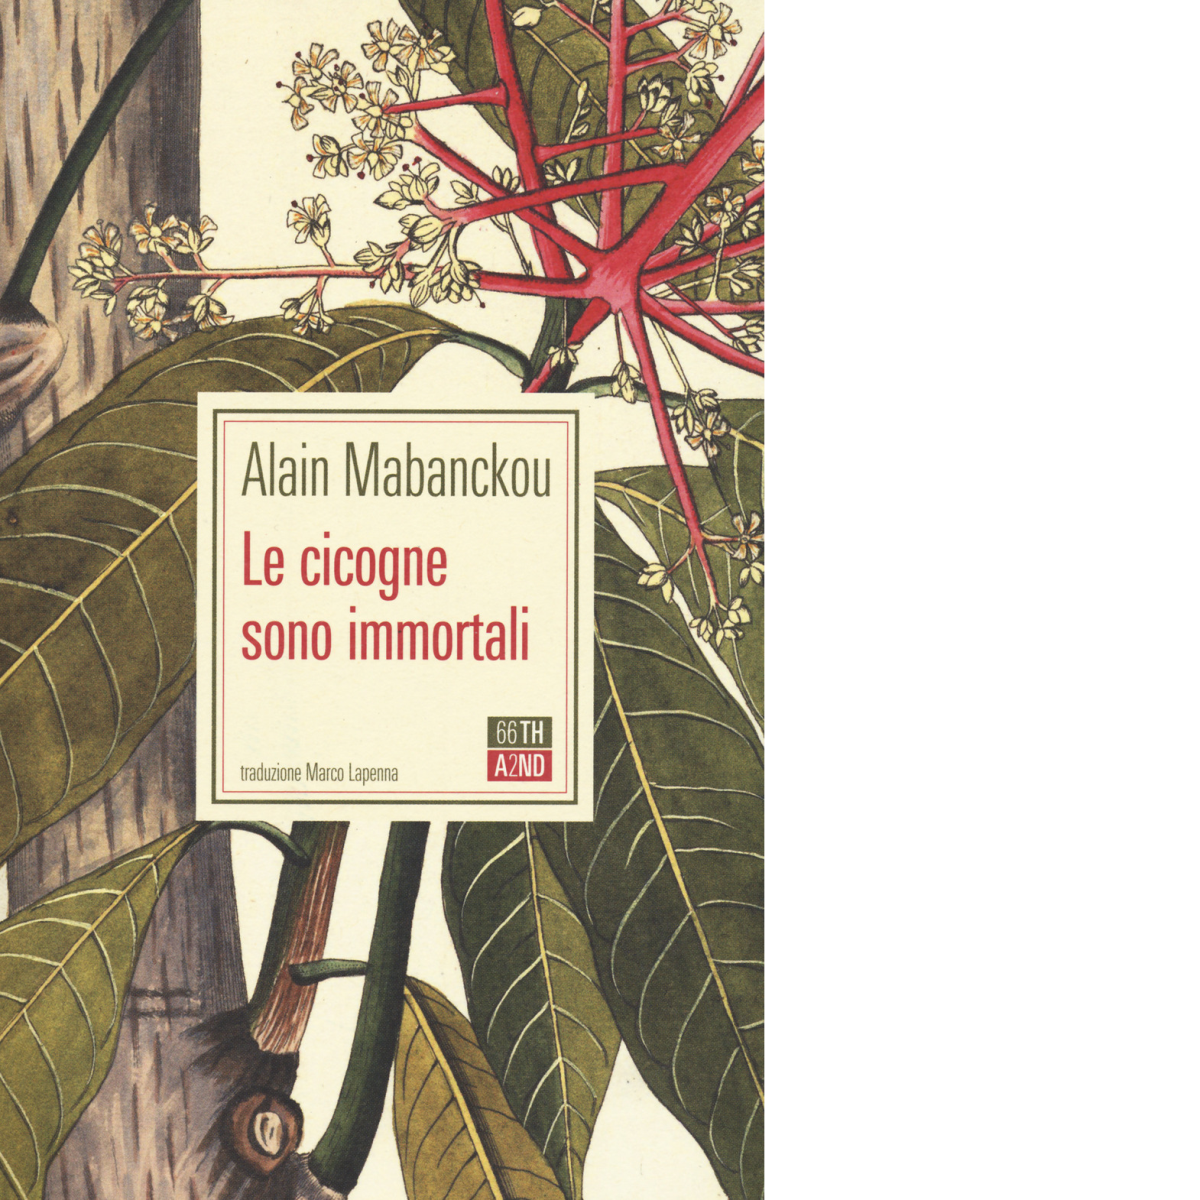 Le cicogne sono immortali di Alain Mabanckou,  2020,  66th And 2nd